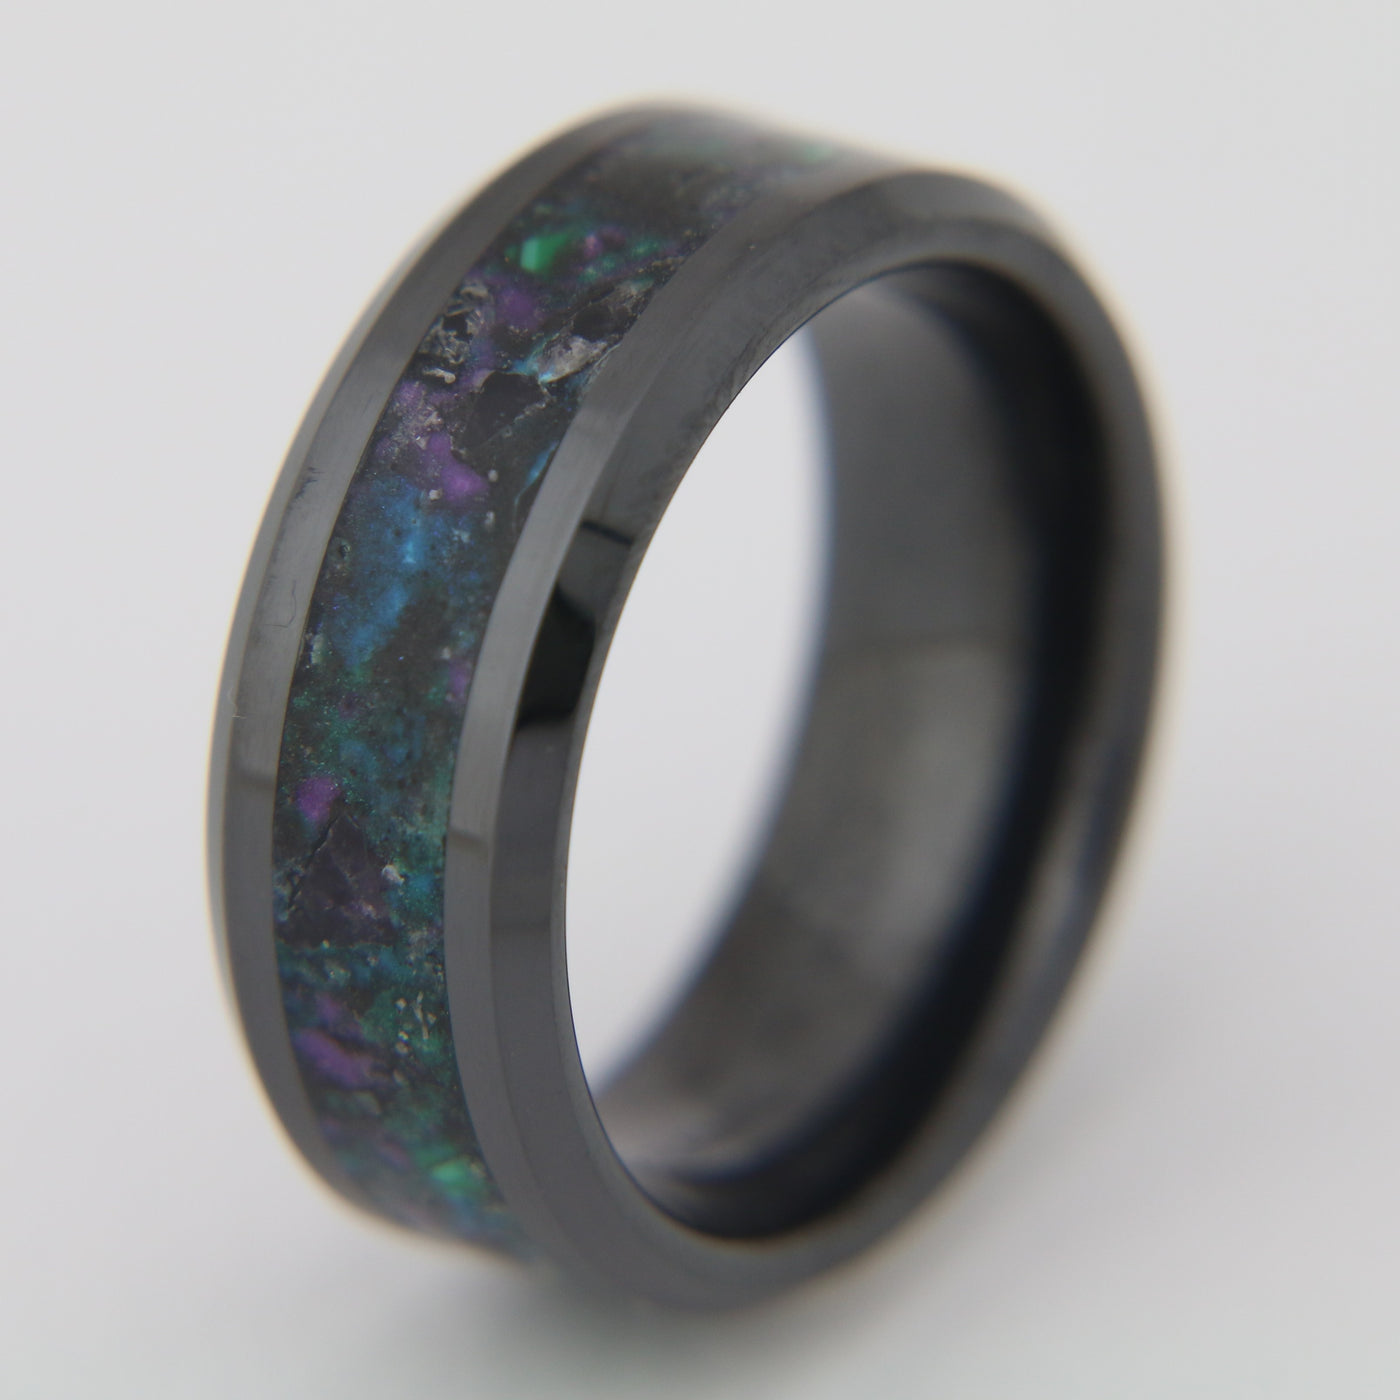 Deep Space Black Ceramic Glowstone Ring - Patrick Adair Designs